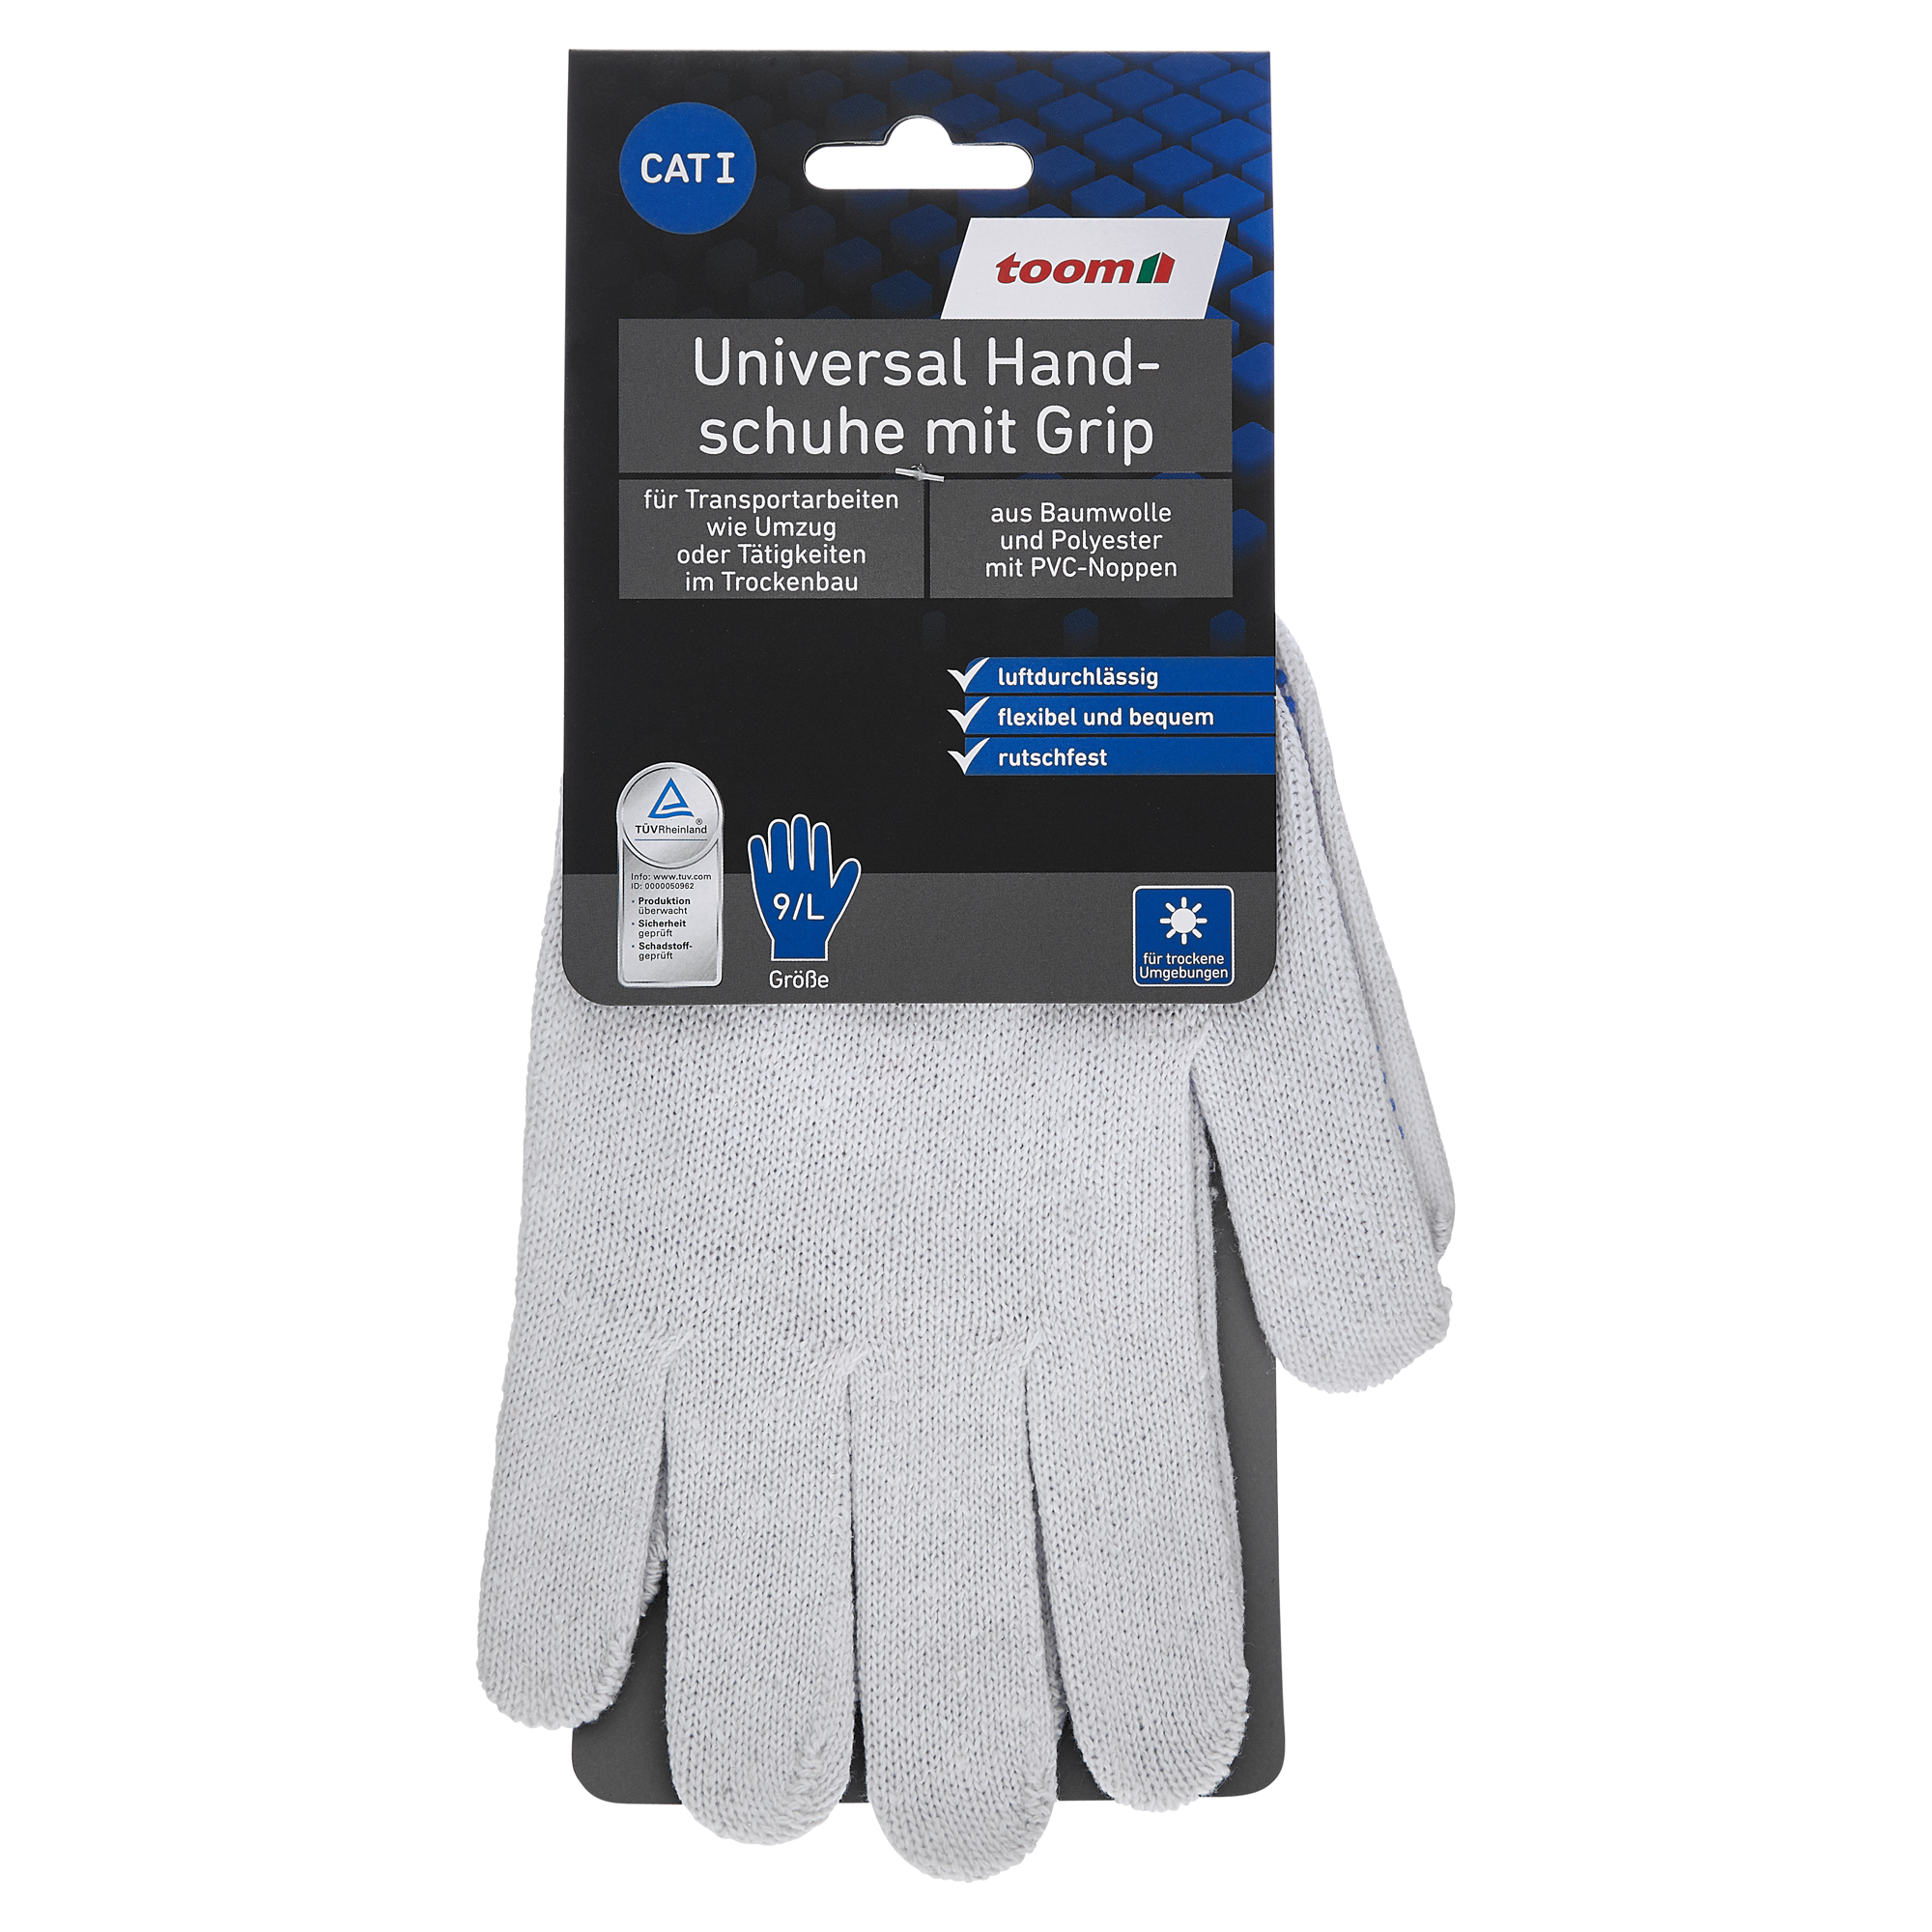 Universal Handschuhe mit Grip weiß Gr. 9/L + product picture